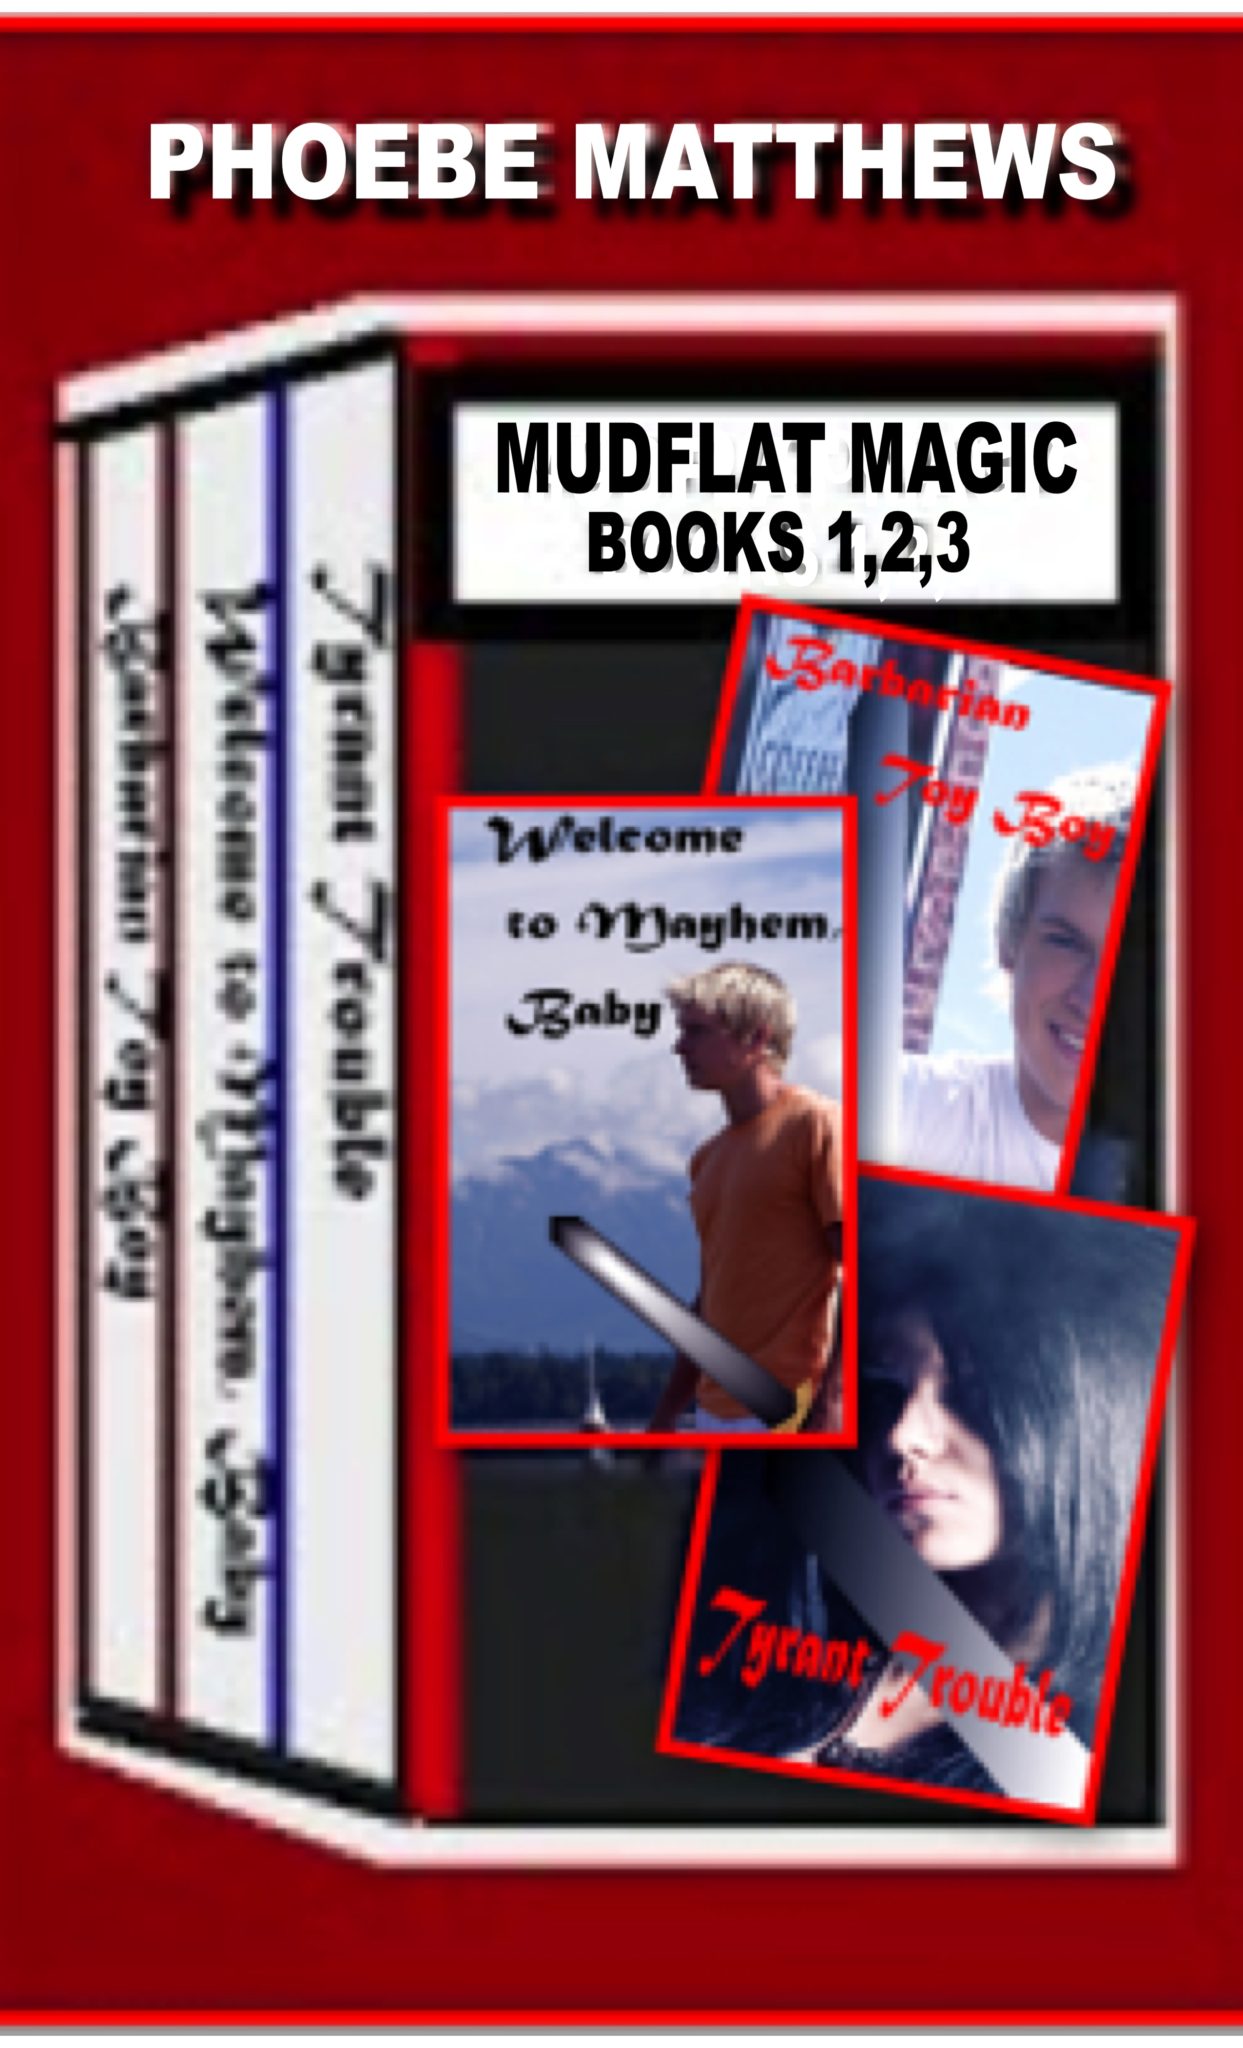 MUDFLAT MAGIC BOOKS 1,2,3 by Phoebe Matthews